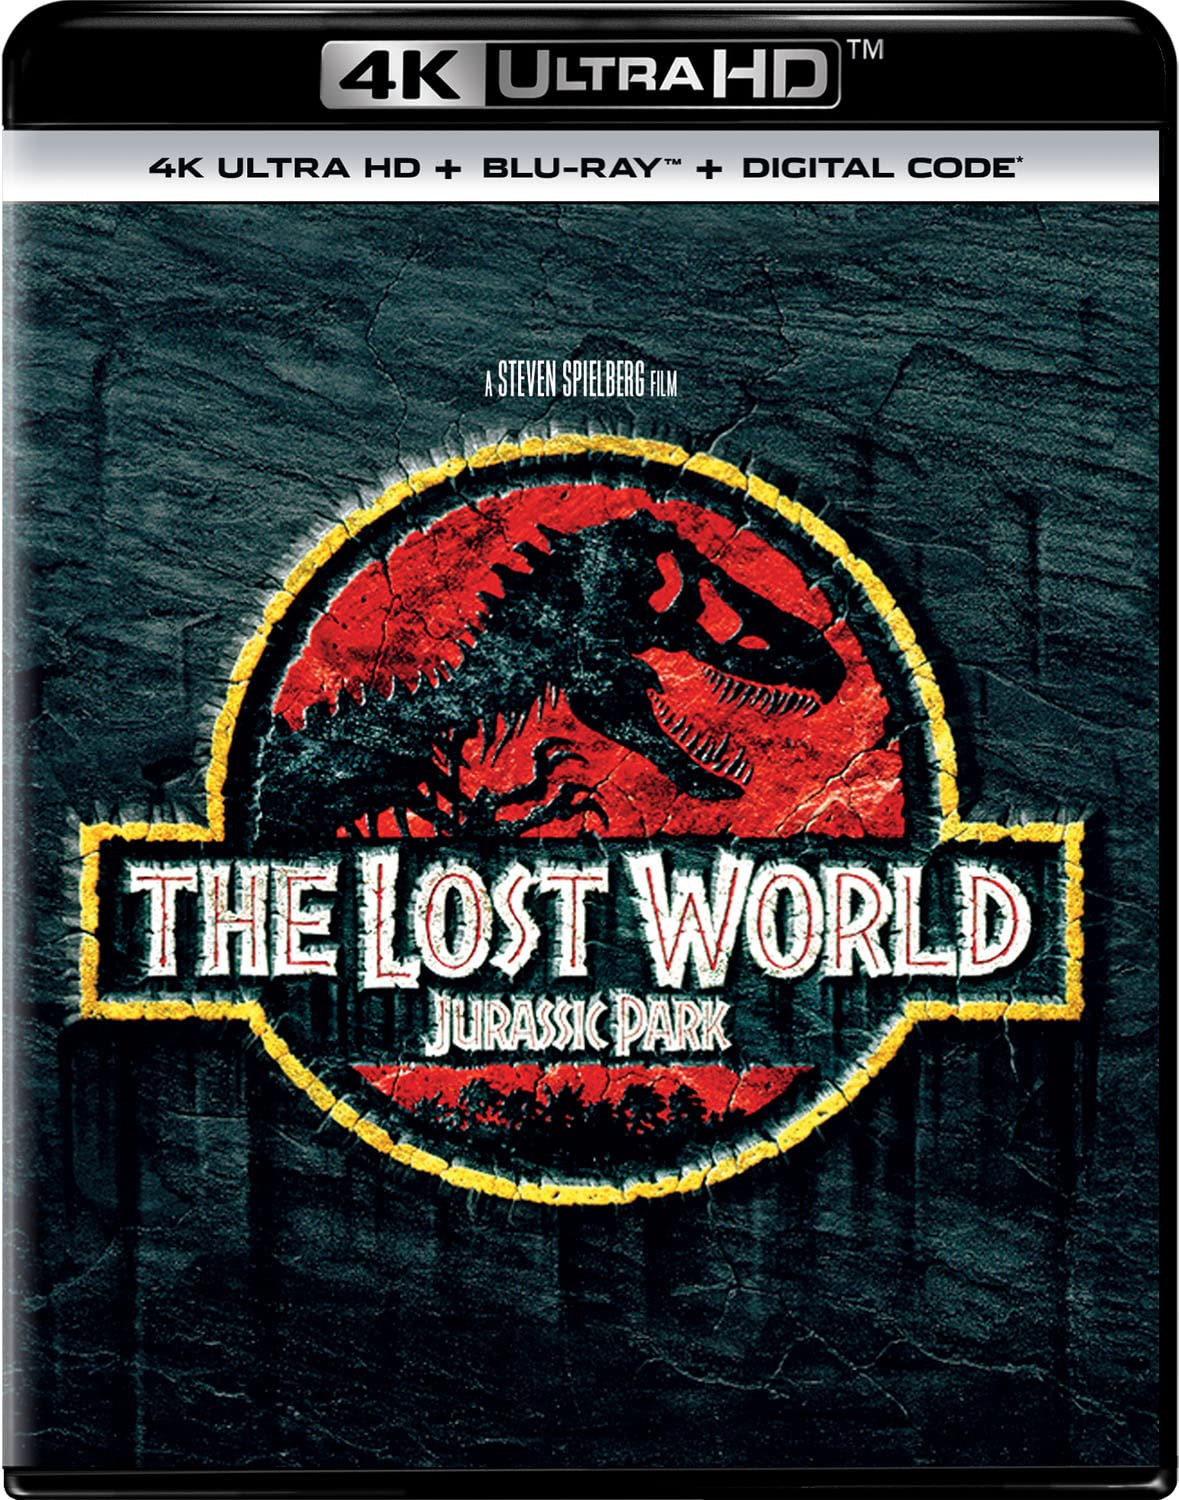 The Lost World- Jurassic Park 4k Blu-ray